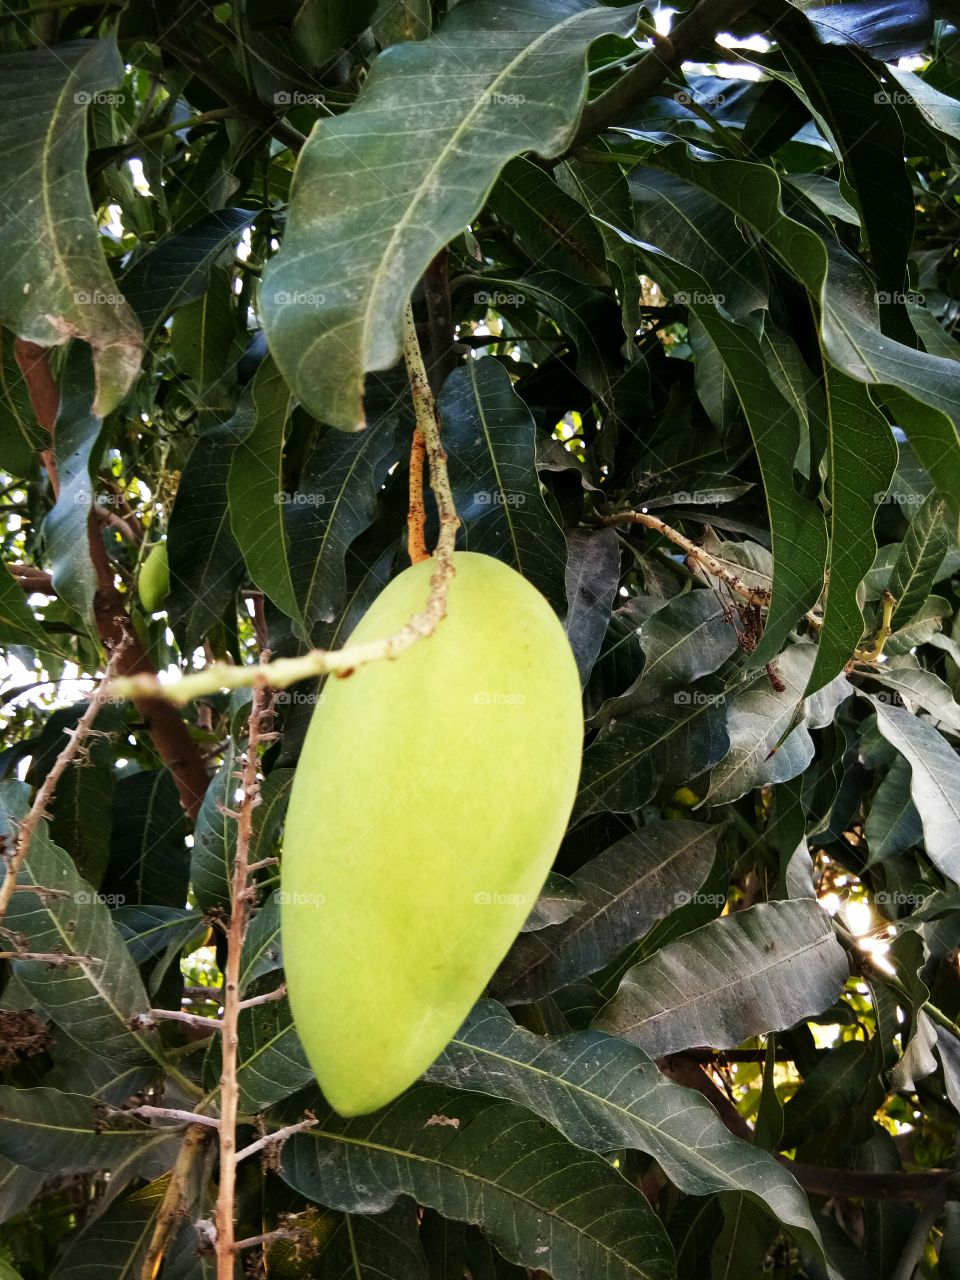 mango
sour
fresh
fruit
good
health
delicious